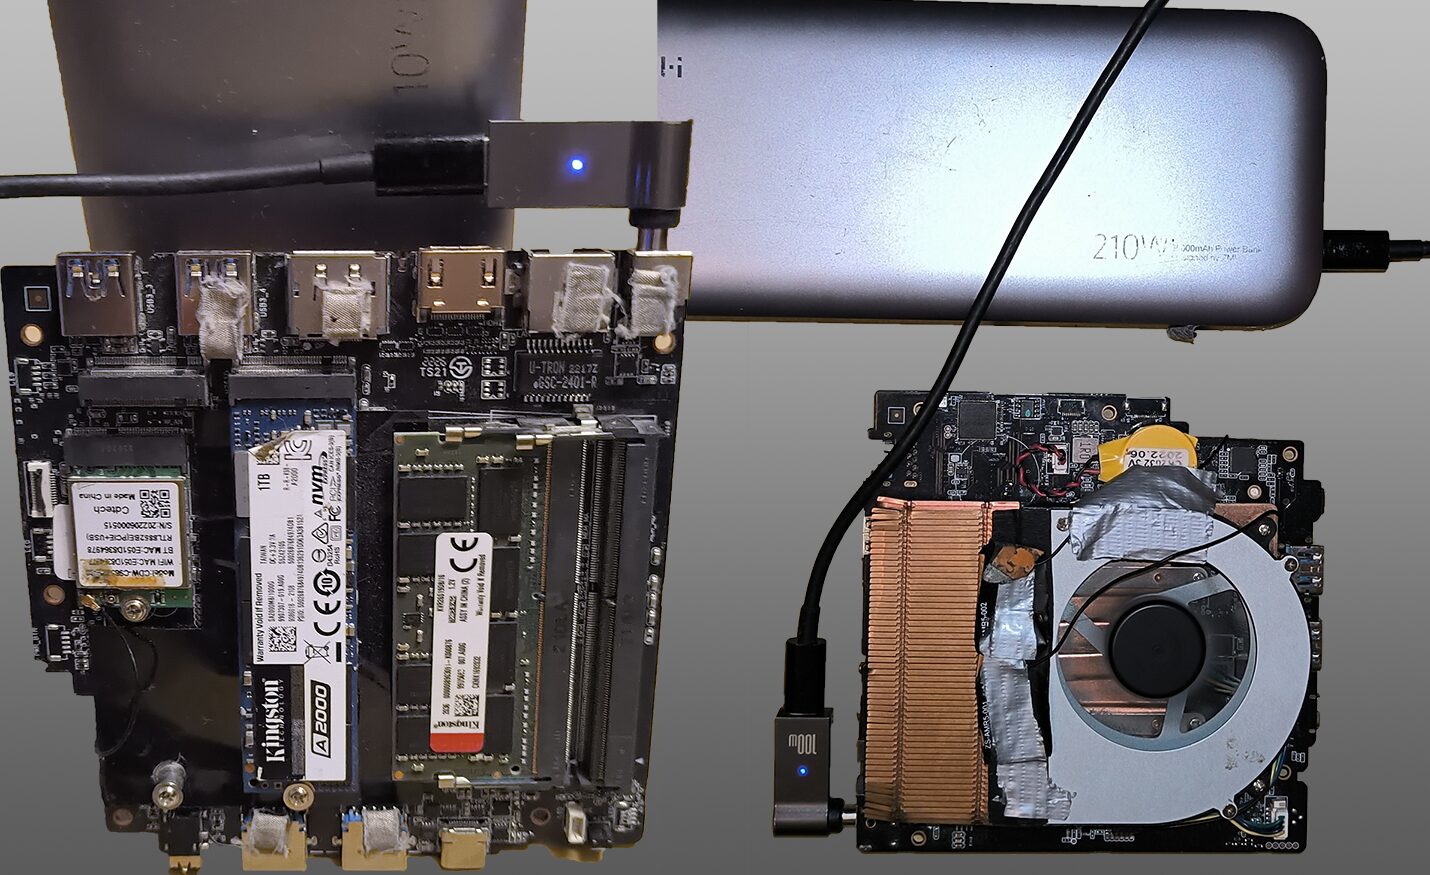 Beelink Mini PC SER6 AMD Ryzen 7 7735HS (8C/16T Up to 4.75GHz), 16GB DDR5  RAM 1TB NVME SSD, AMD Radeon Graphics, Windows 11 Pro, WiFi 6/BT 5.2 